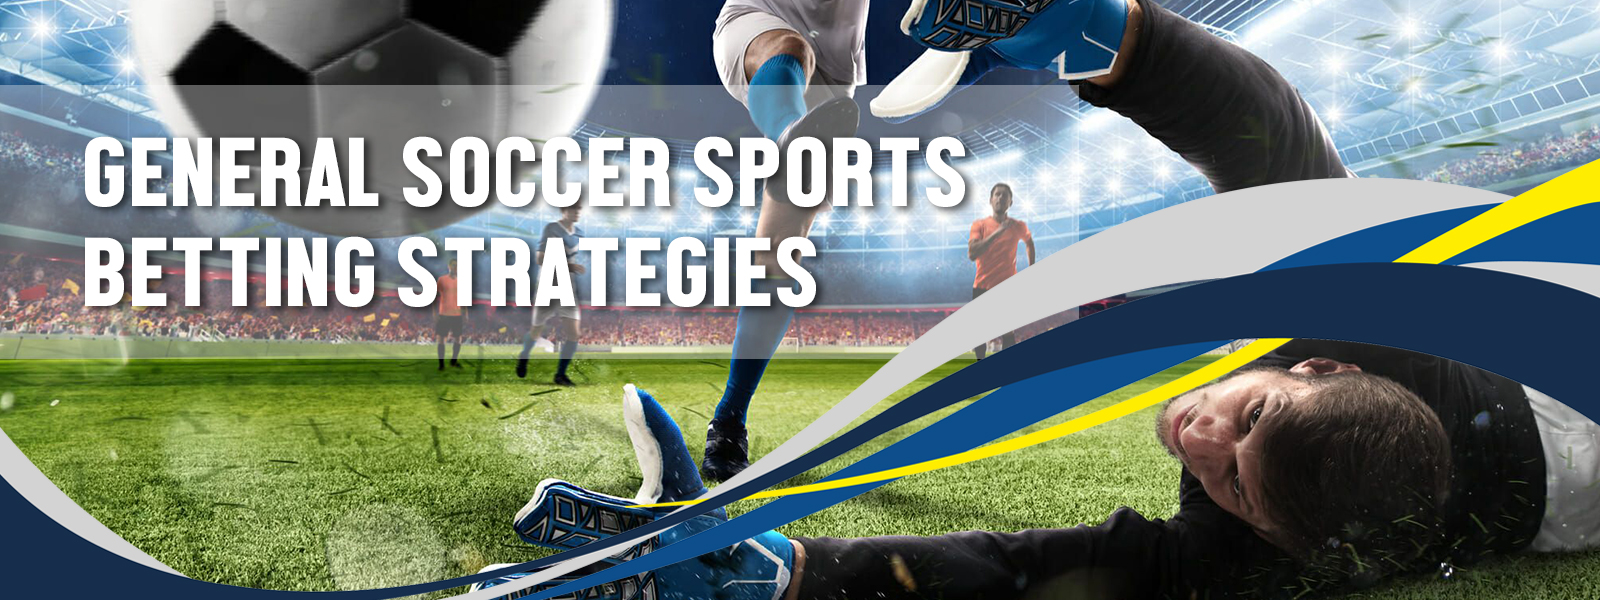 General Soccer Sports Betting Strategies